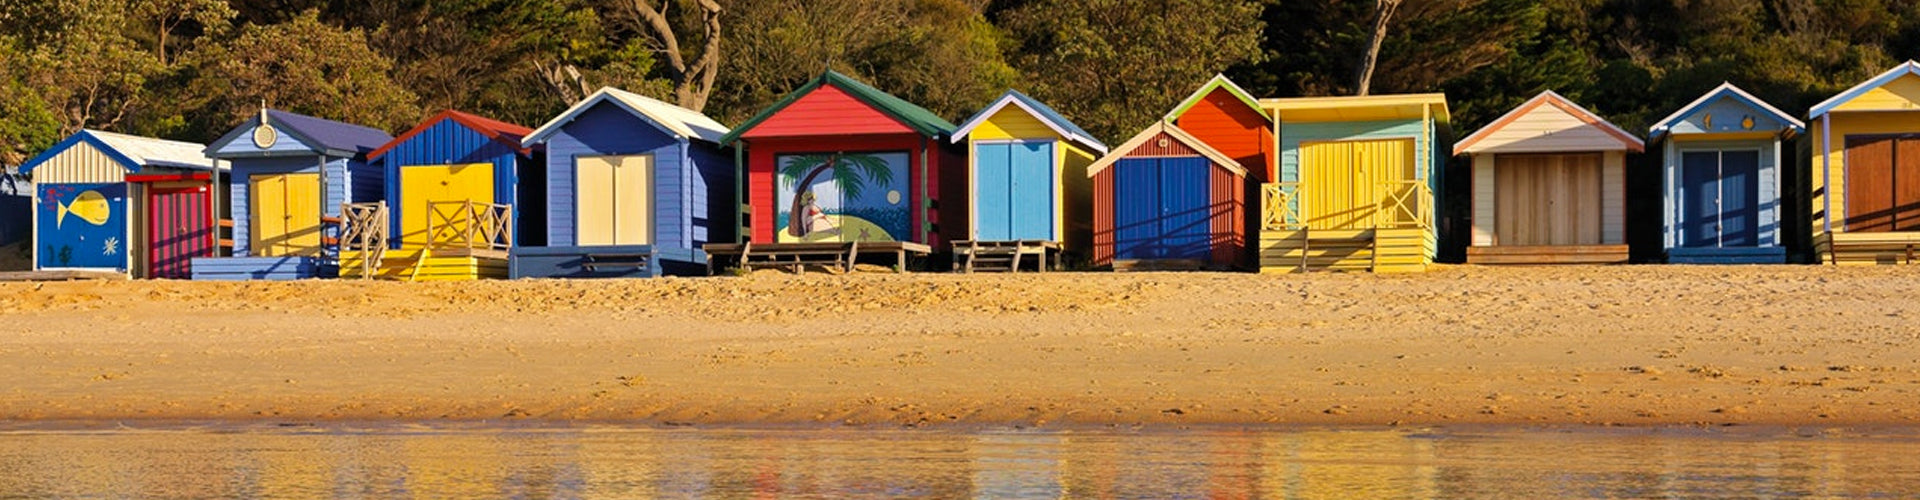 Multi Coloured Beach Boxes at Mills Beach, Morninghton Peninsula